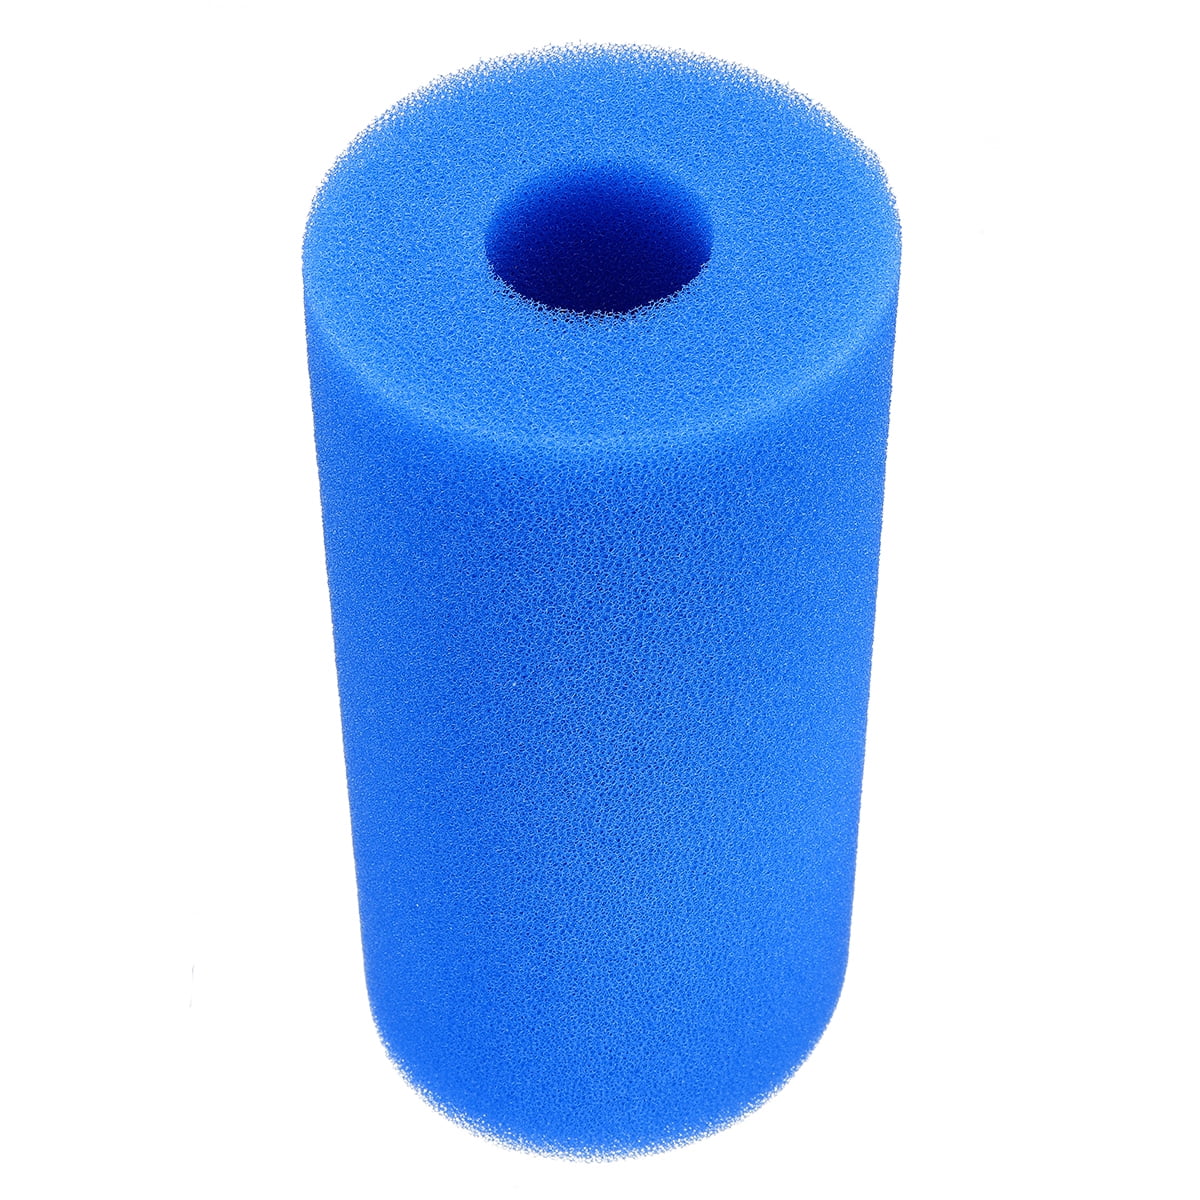 Houkiper Filter Sponge 3pcs For Intex Type A Reusable//Washable Swimming Pool Filter Foam Cartridge Sponge